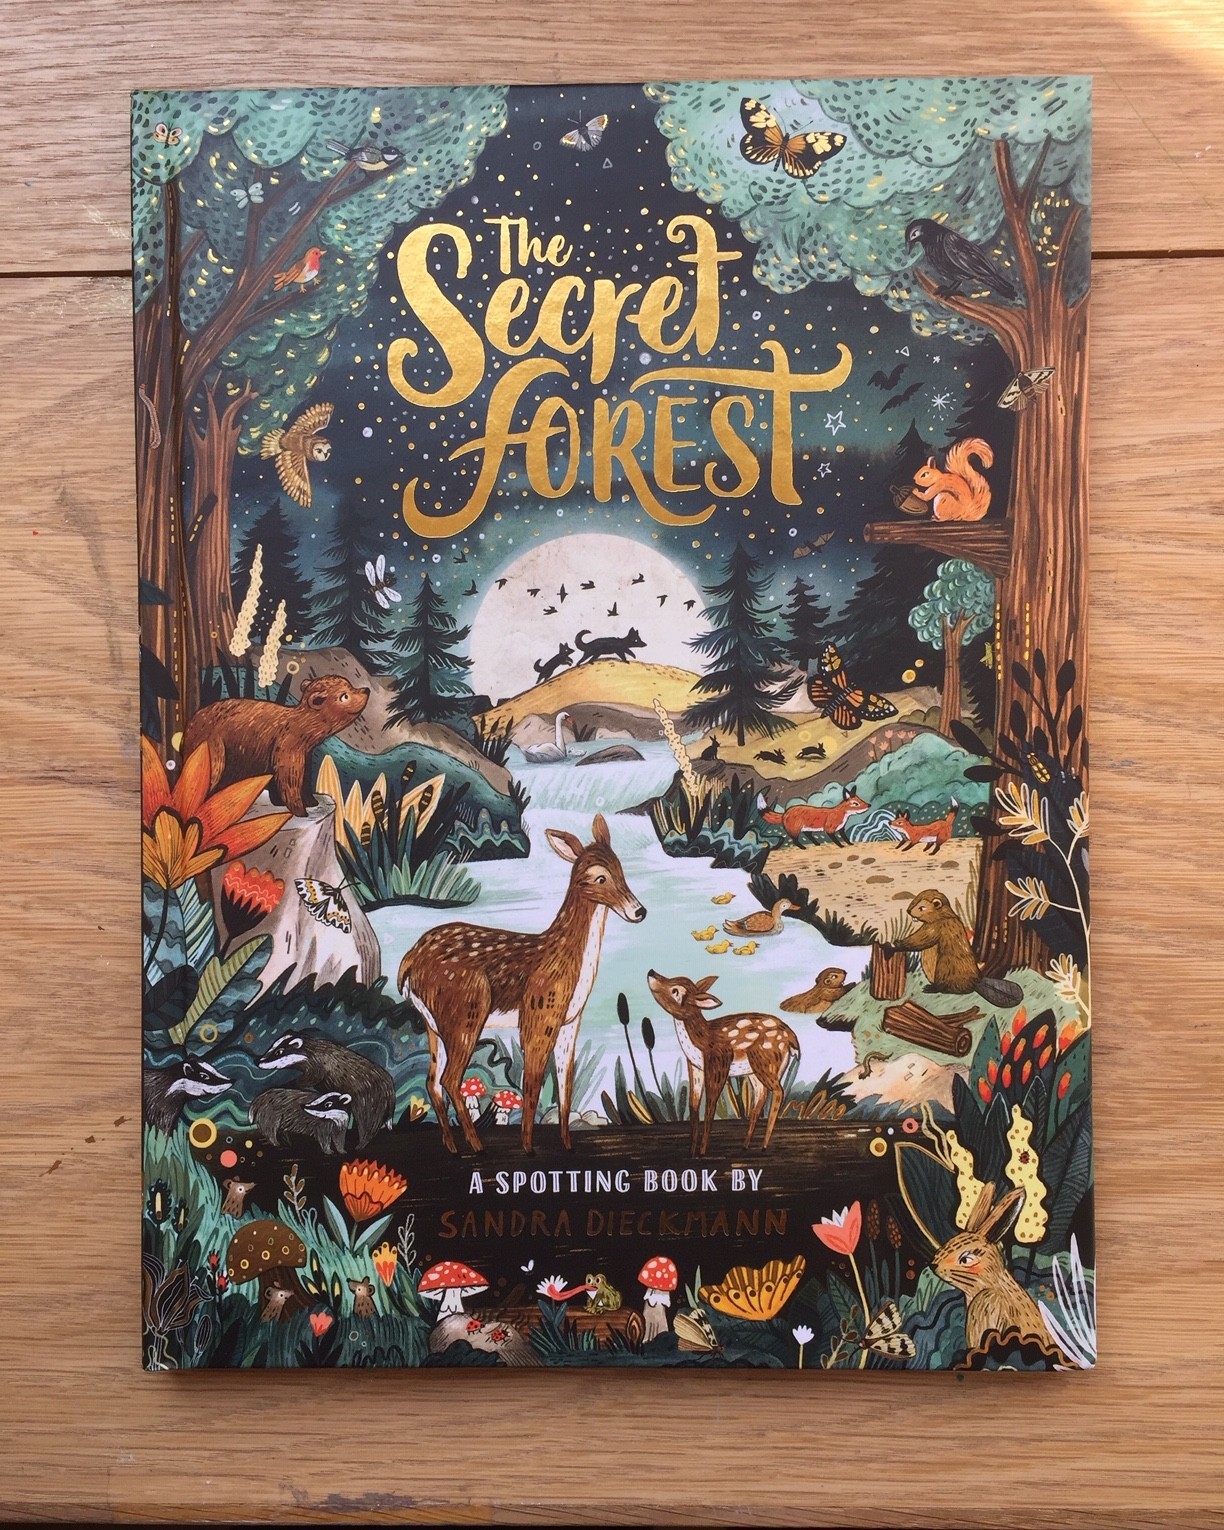 The Secret Forest by Sandra Dieckmann